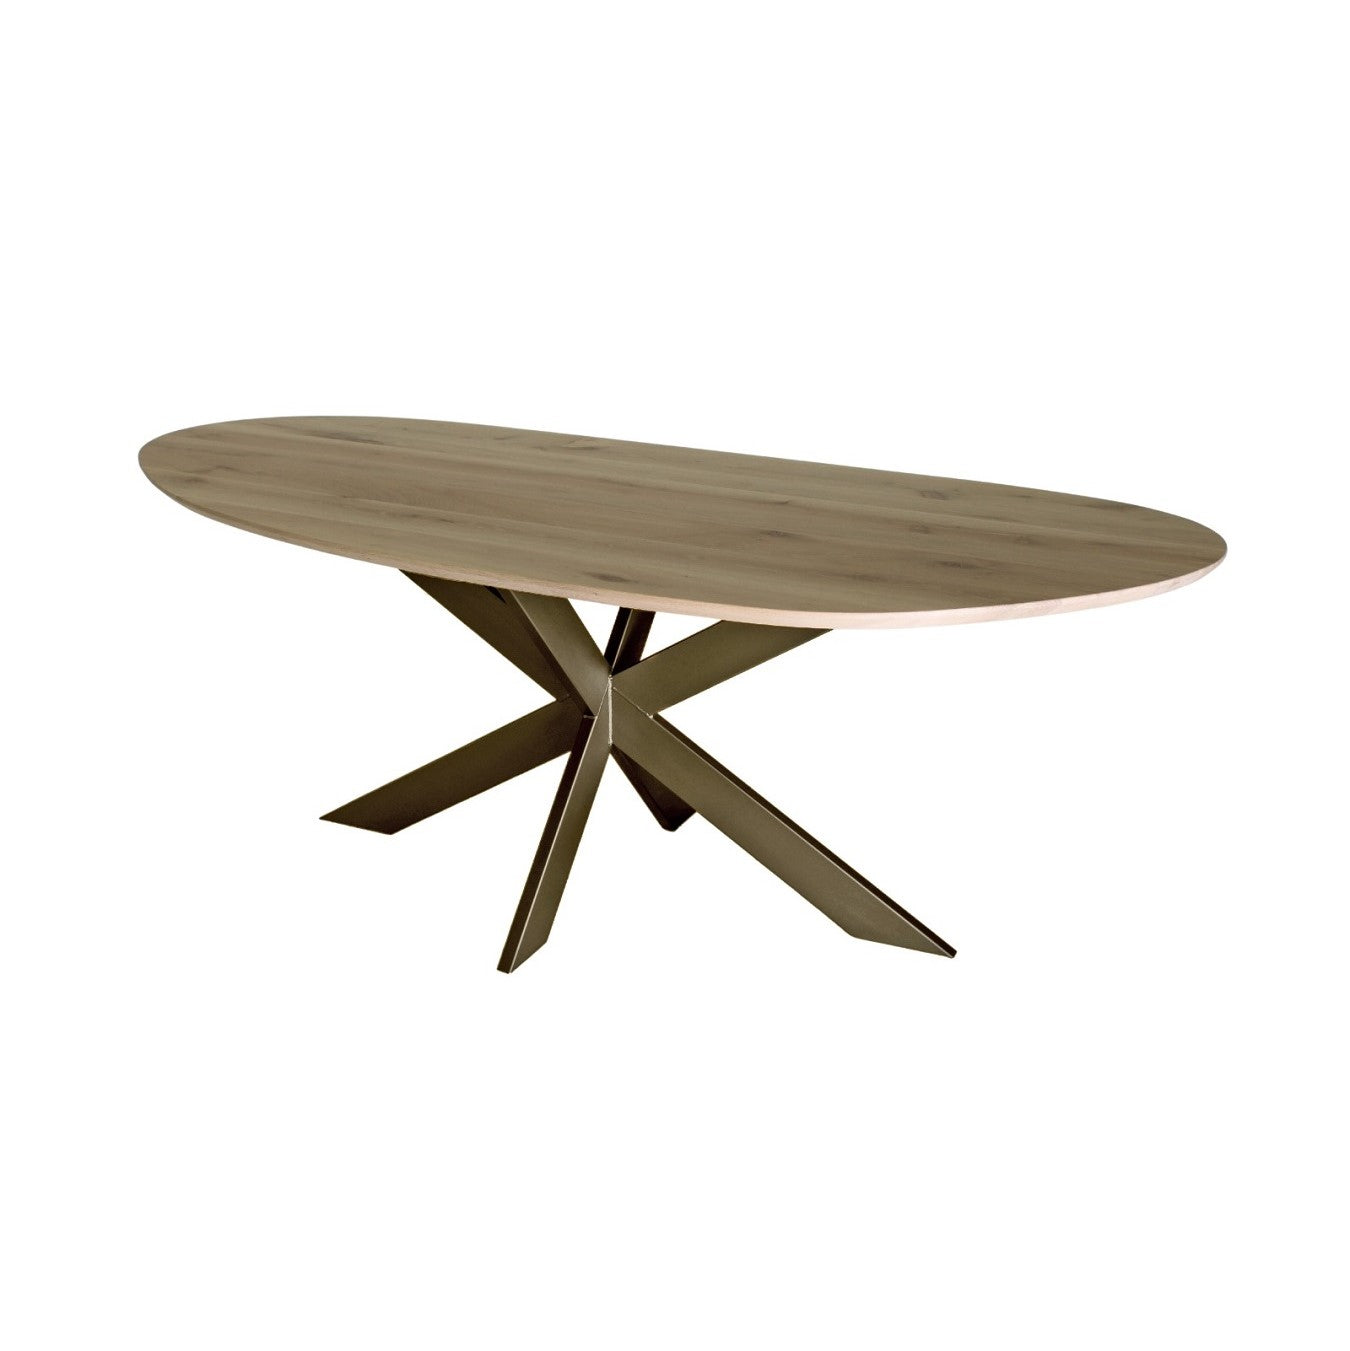 Oval oak table with straight edge • MIKADO SLIM B model